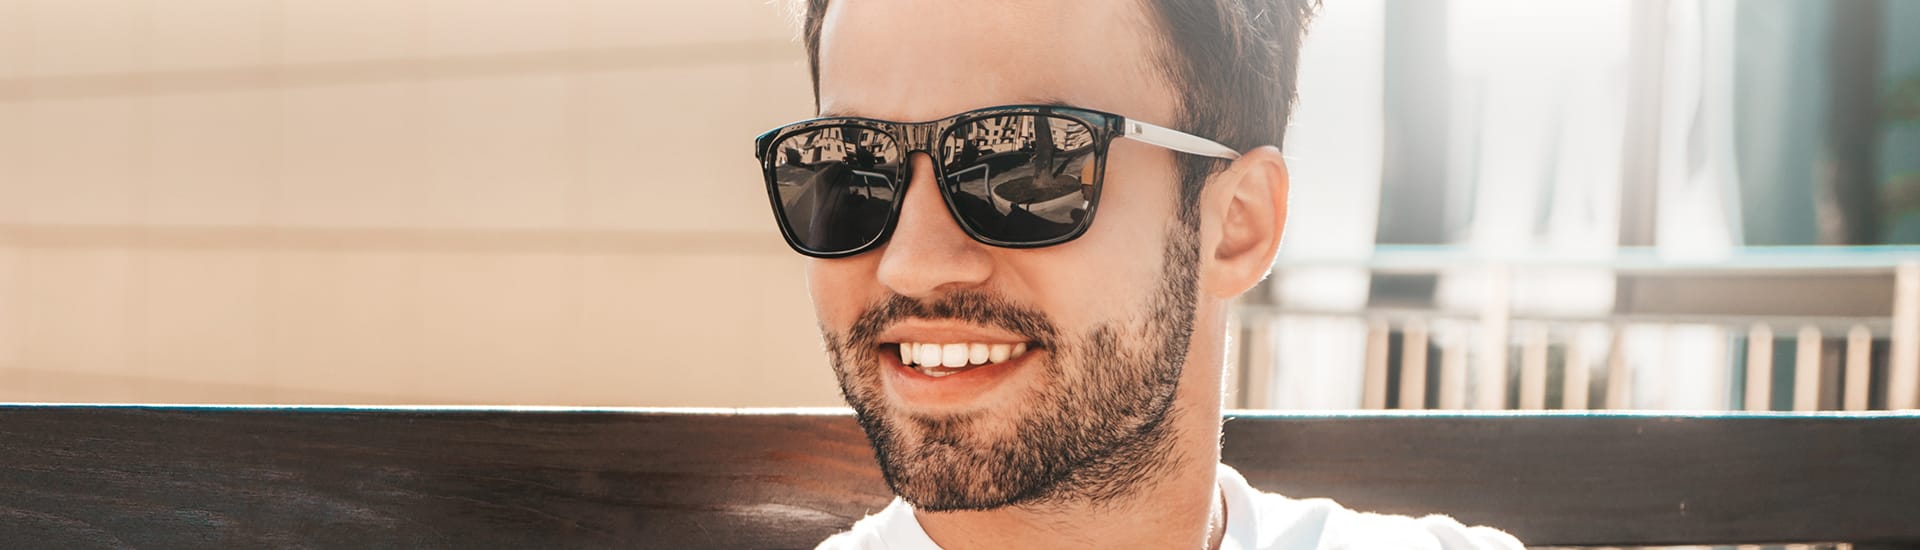 Are Polarized Sunglasses Better for You? | Daniel Island